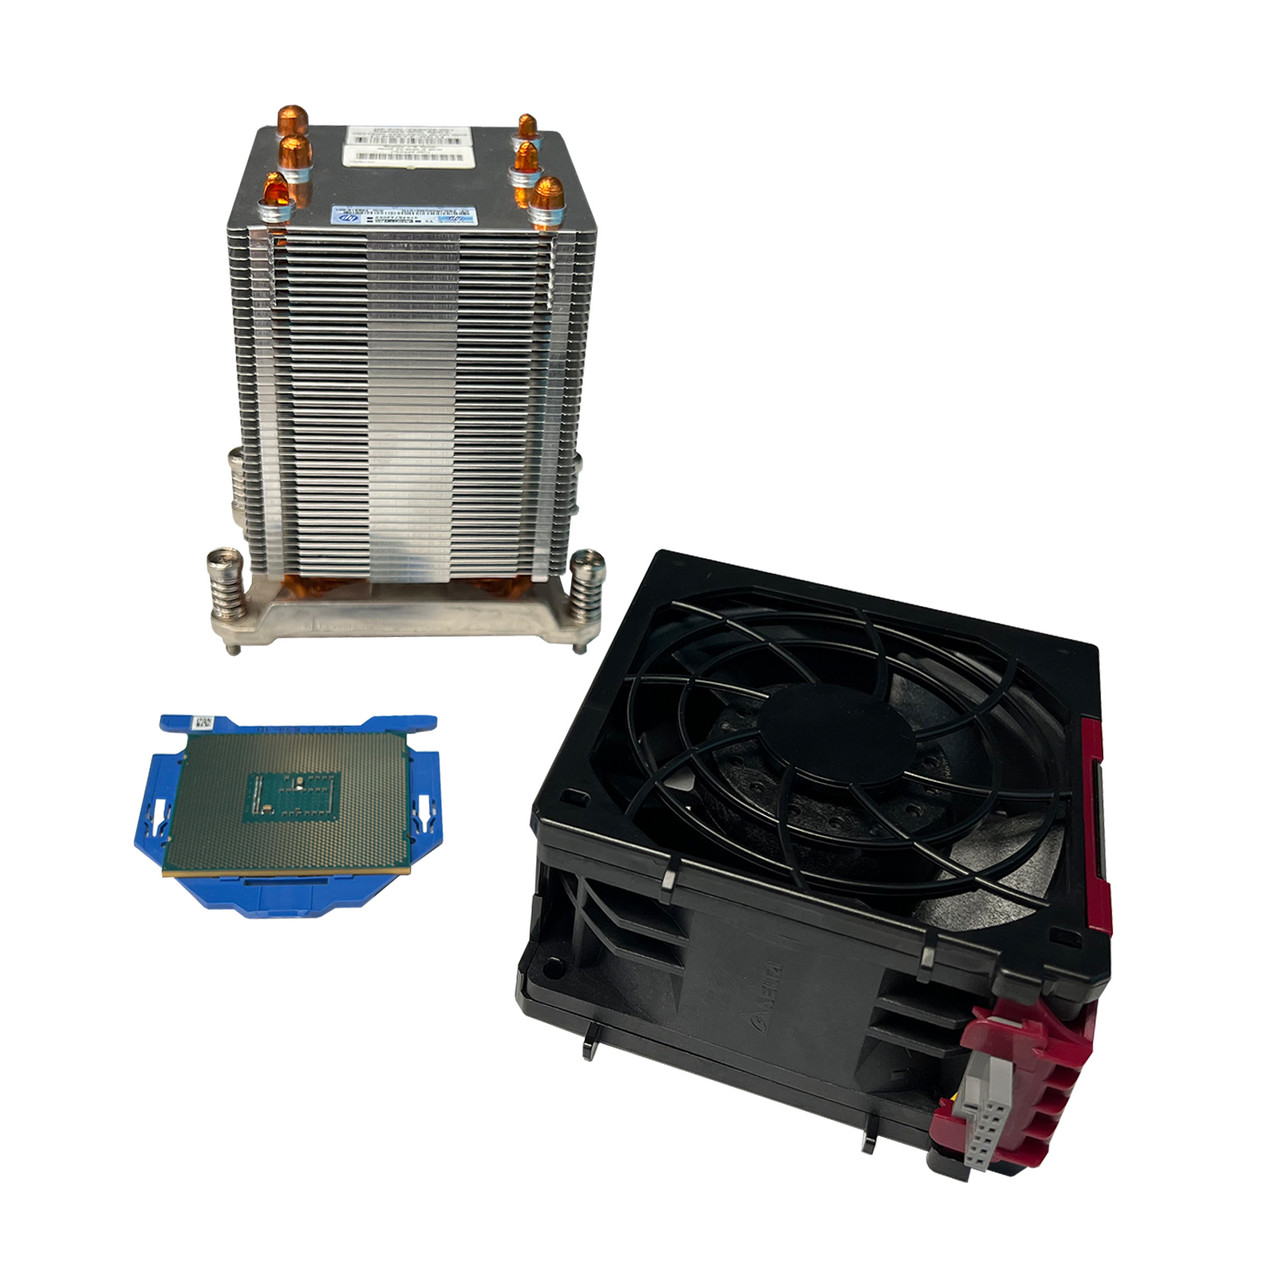 HPE 801255-B21 ML350 Gen9 Xeon E5-2643 V4 6C 3.4Ghz Processor Kit